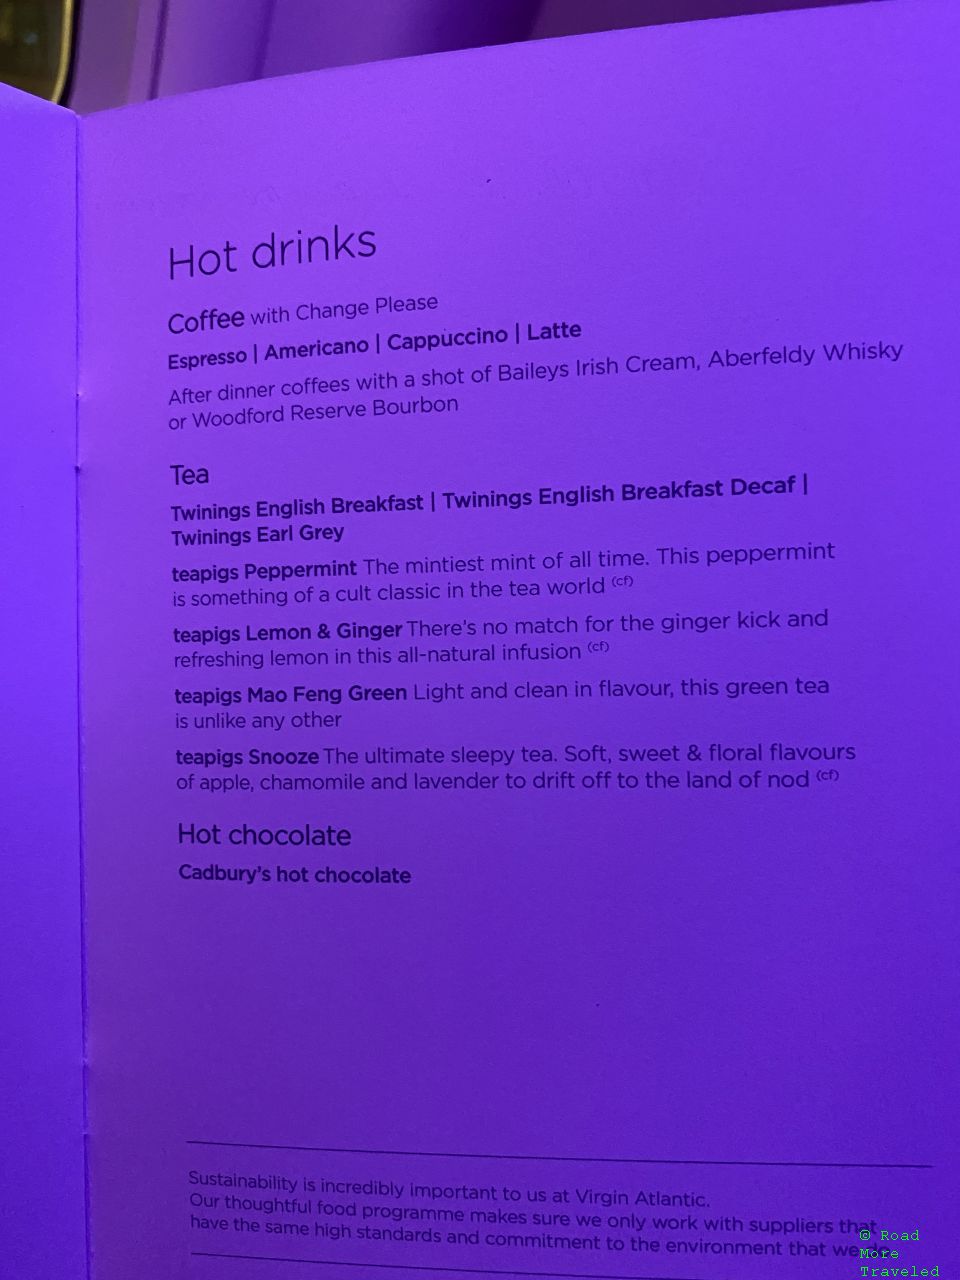 Virgin Atlantic Upper Class hot drinks menu